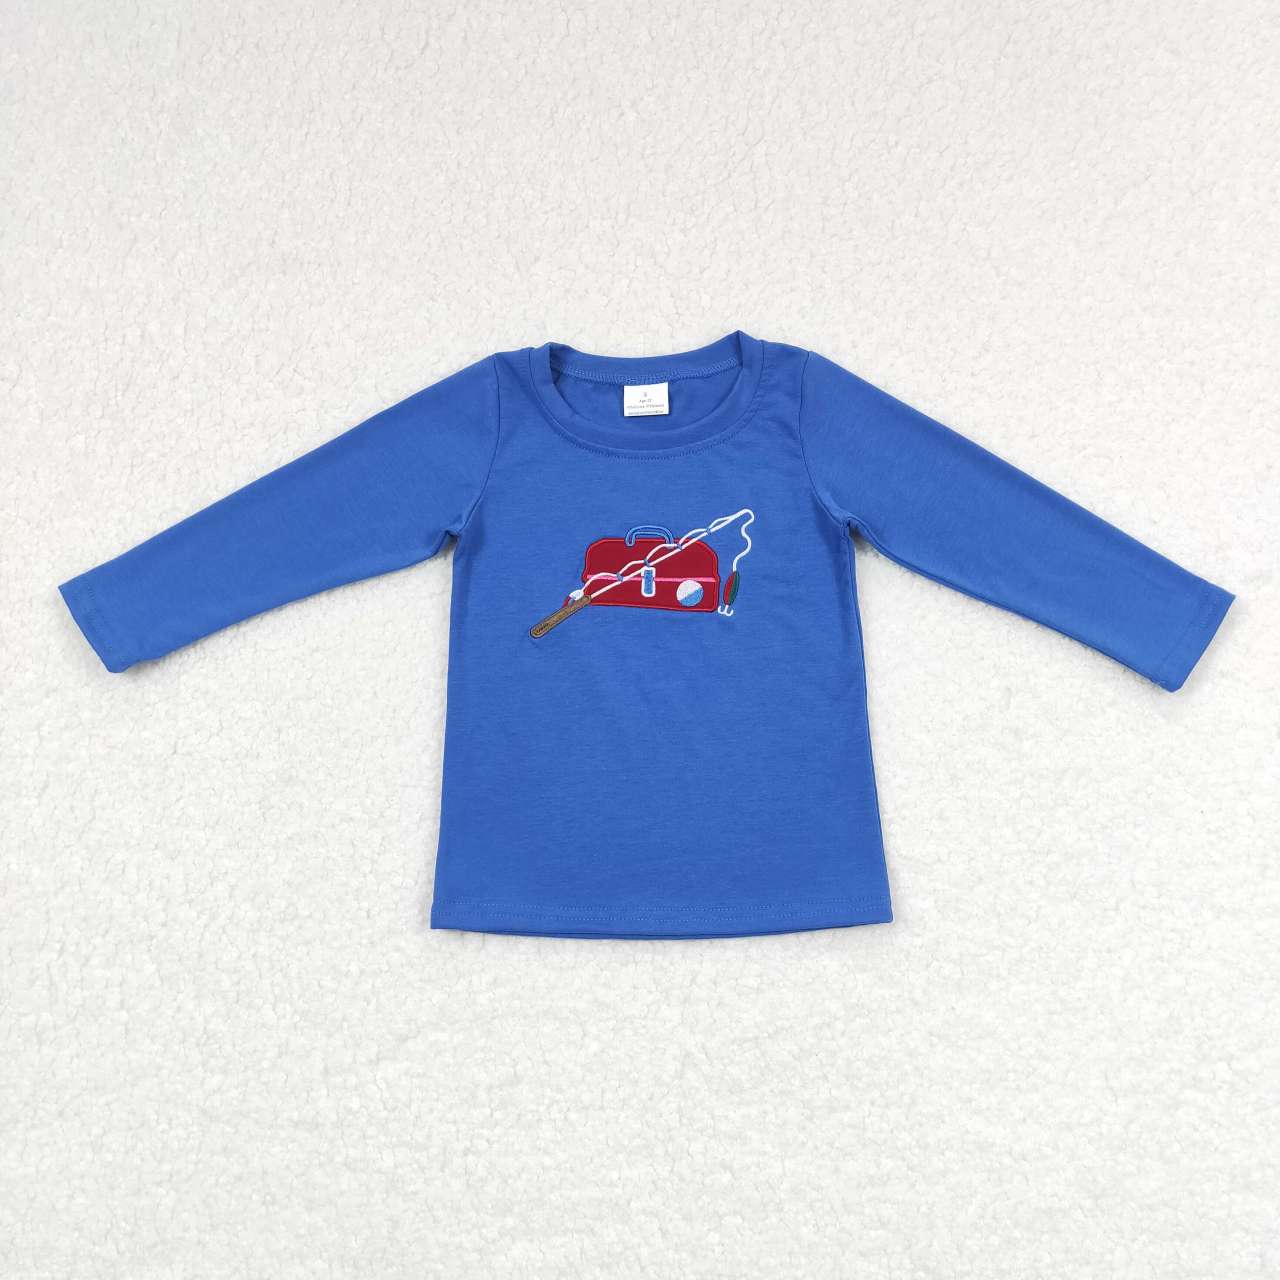 BT0364 Fishing Embroidery Print Blue Kids Tee Shirts Top